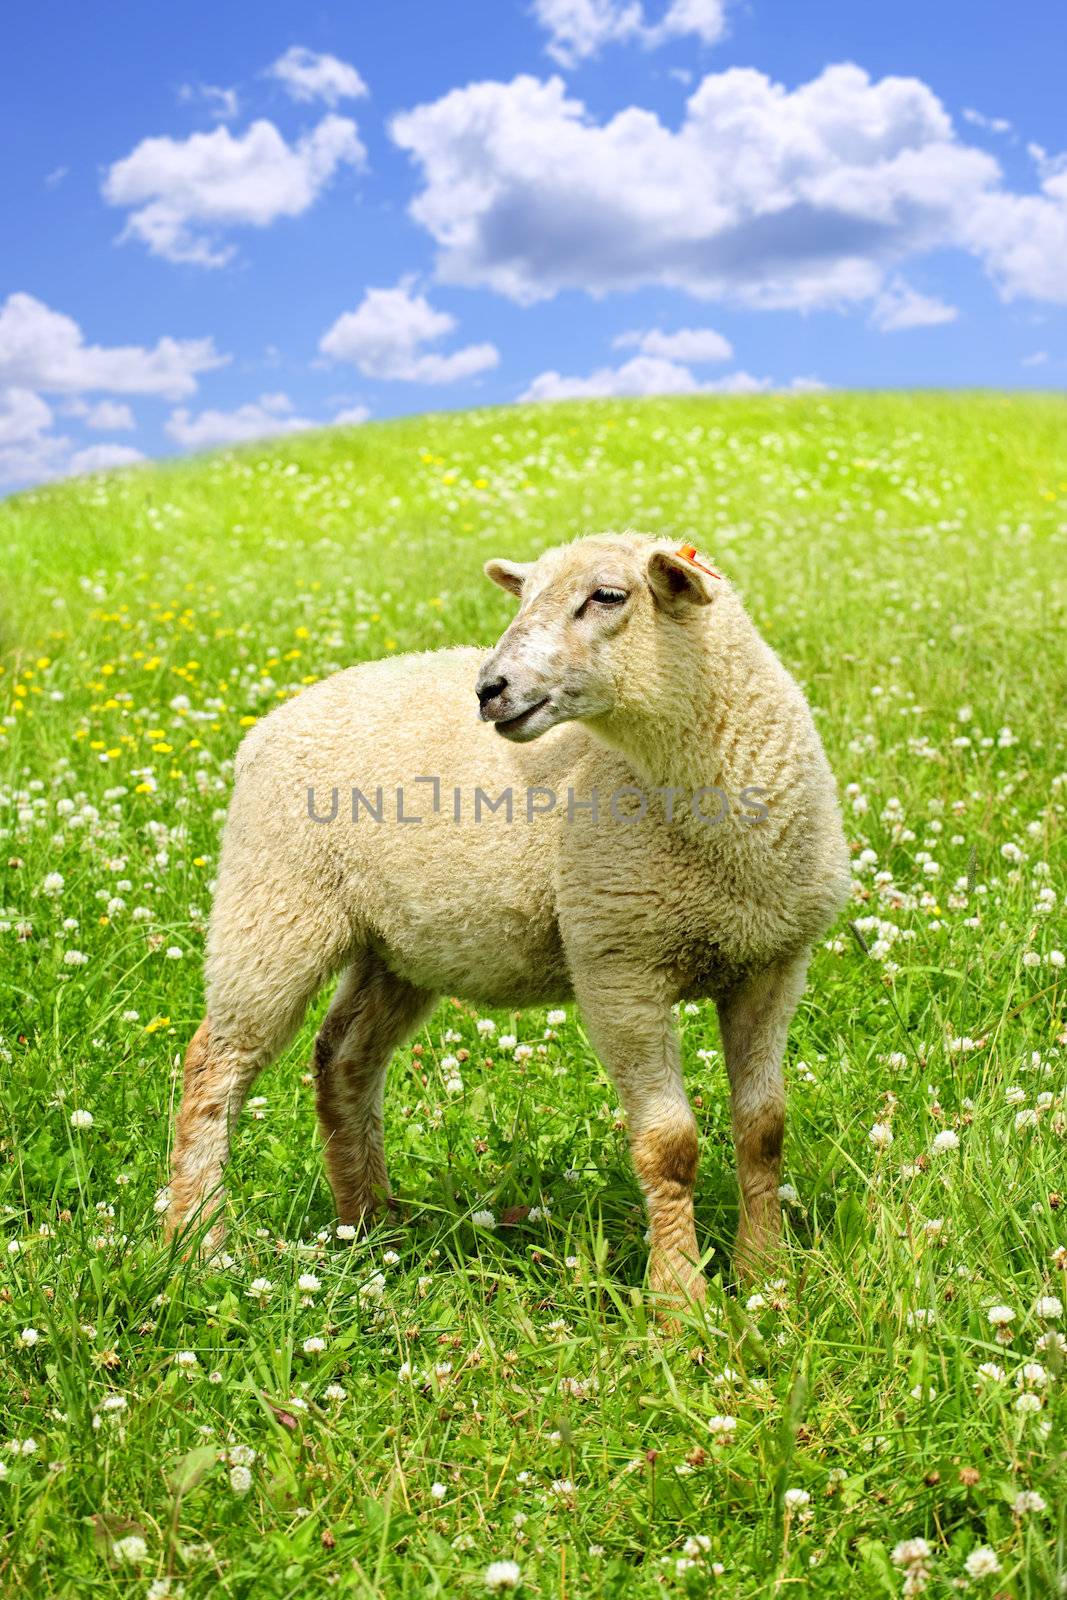 Cute funny sheep or lamb in green meadow